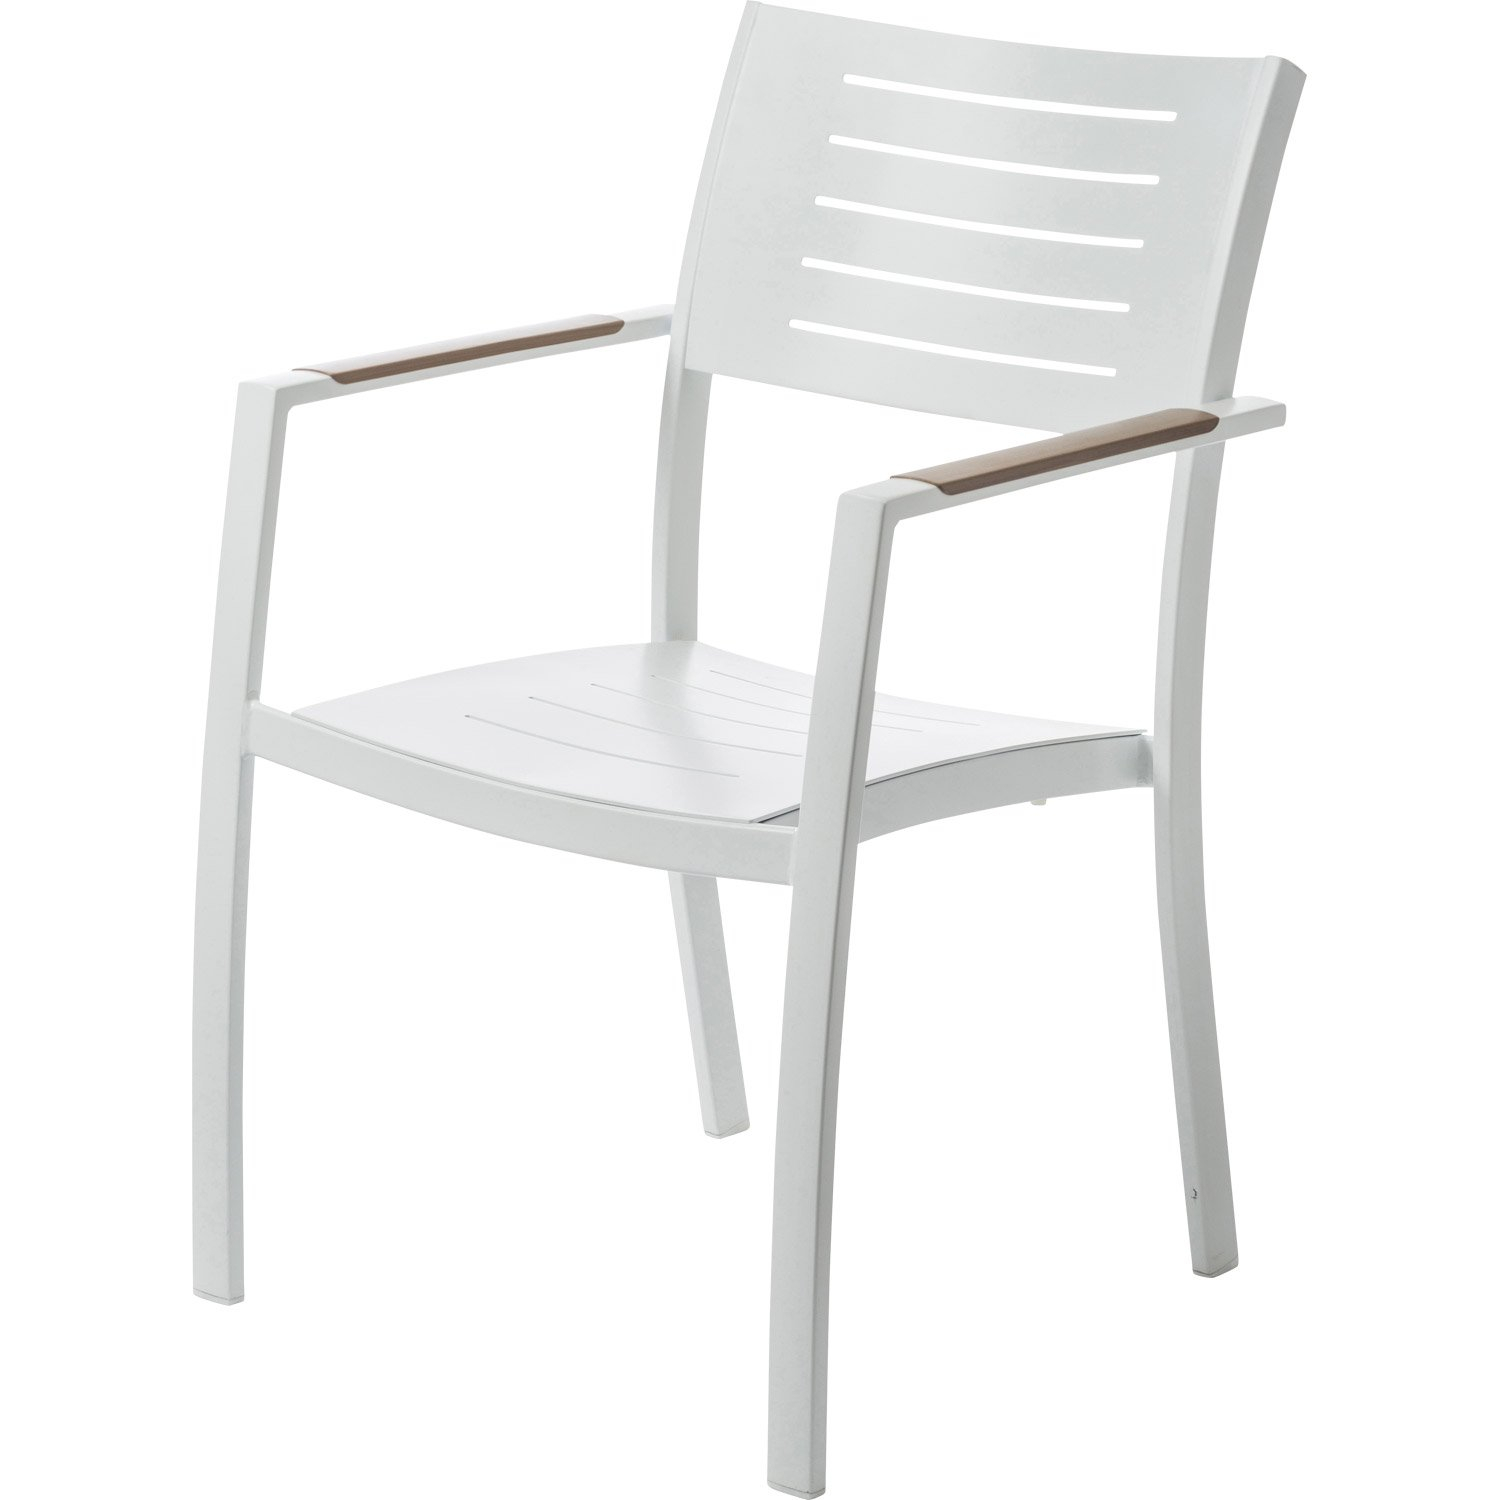 chaise de jardin en aluminium design la maison beau leroy merlin fauteuil de jardin en aluminium port nelson blanc